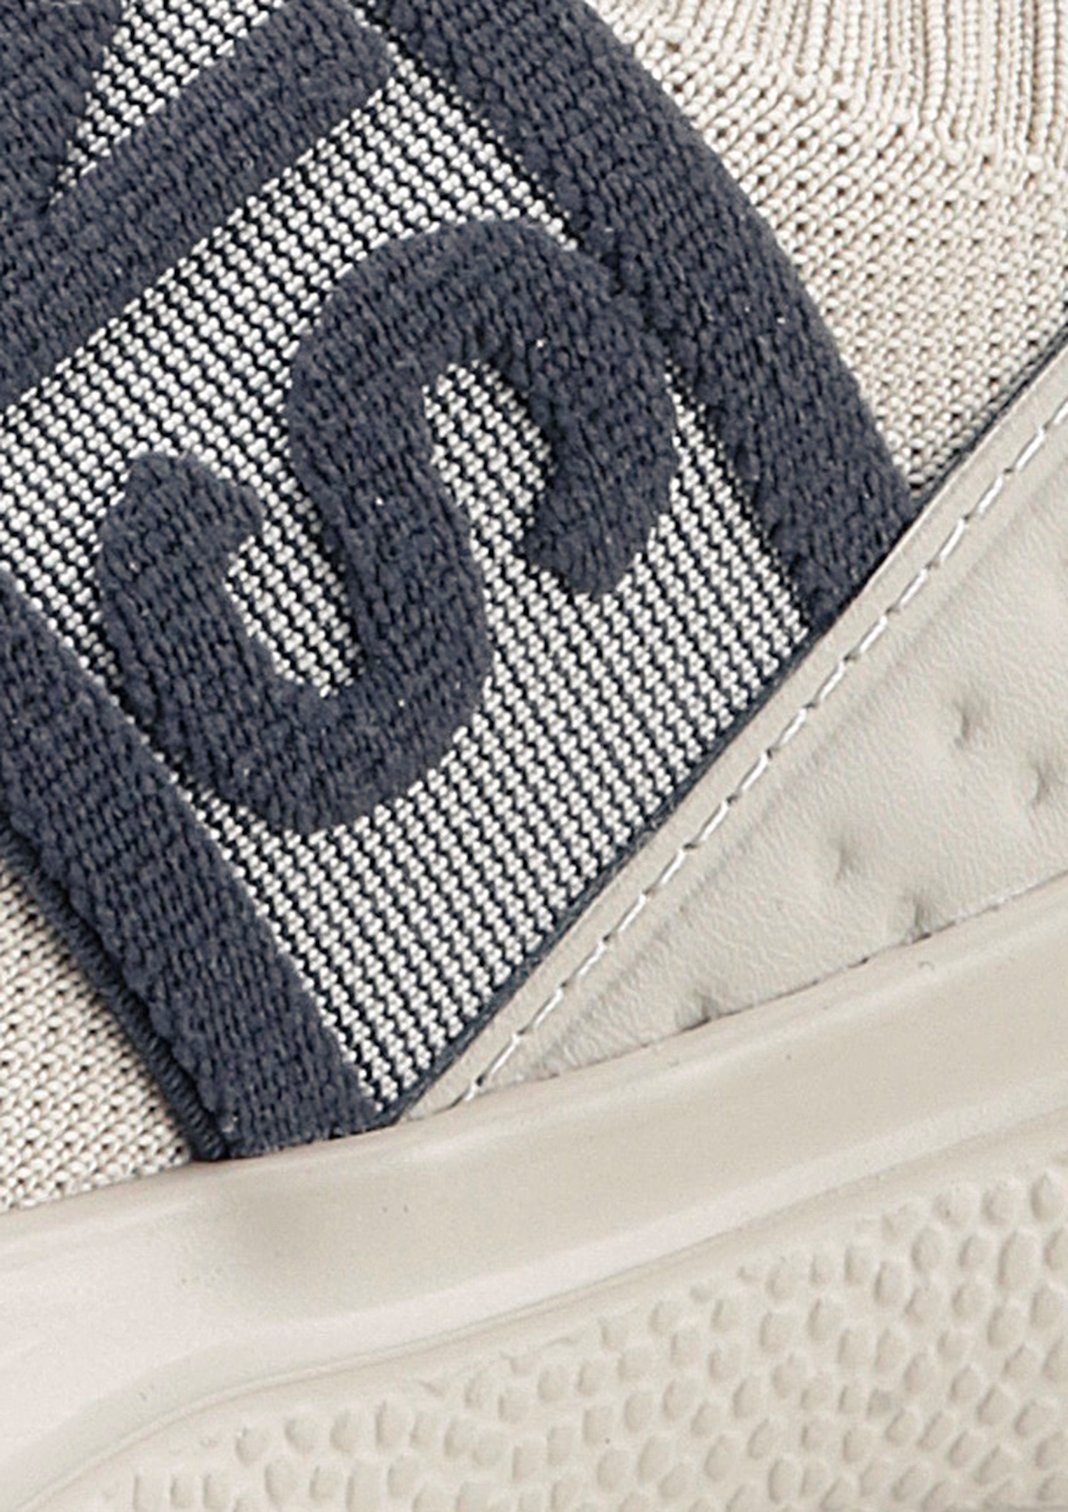 FLEXI Logo auffälligem mit Sneaker LOGOTAPE TJW Jeans Slip-On Tommy stein-anthrazit